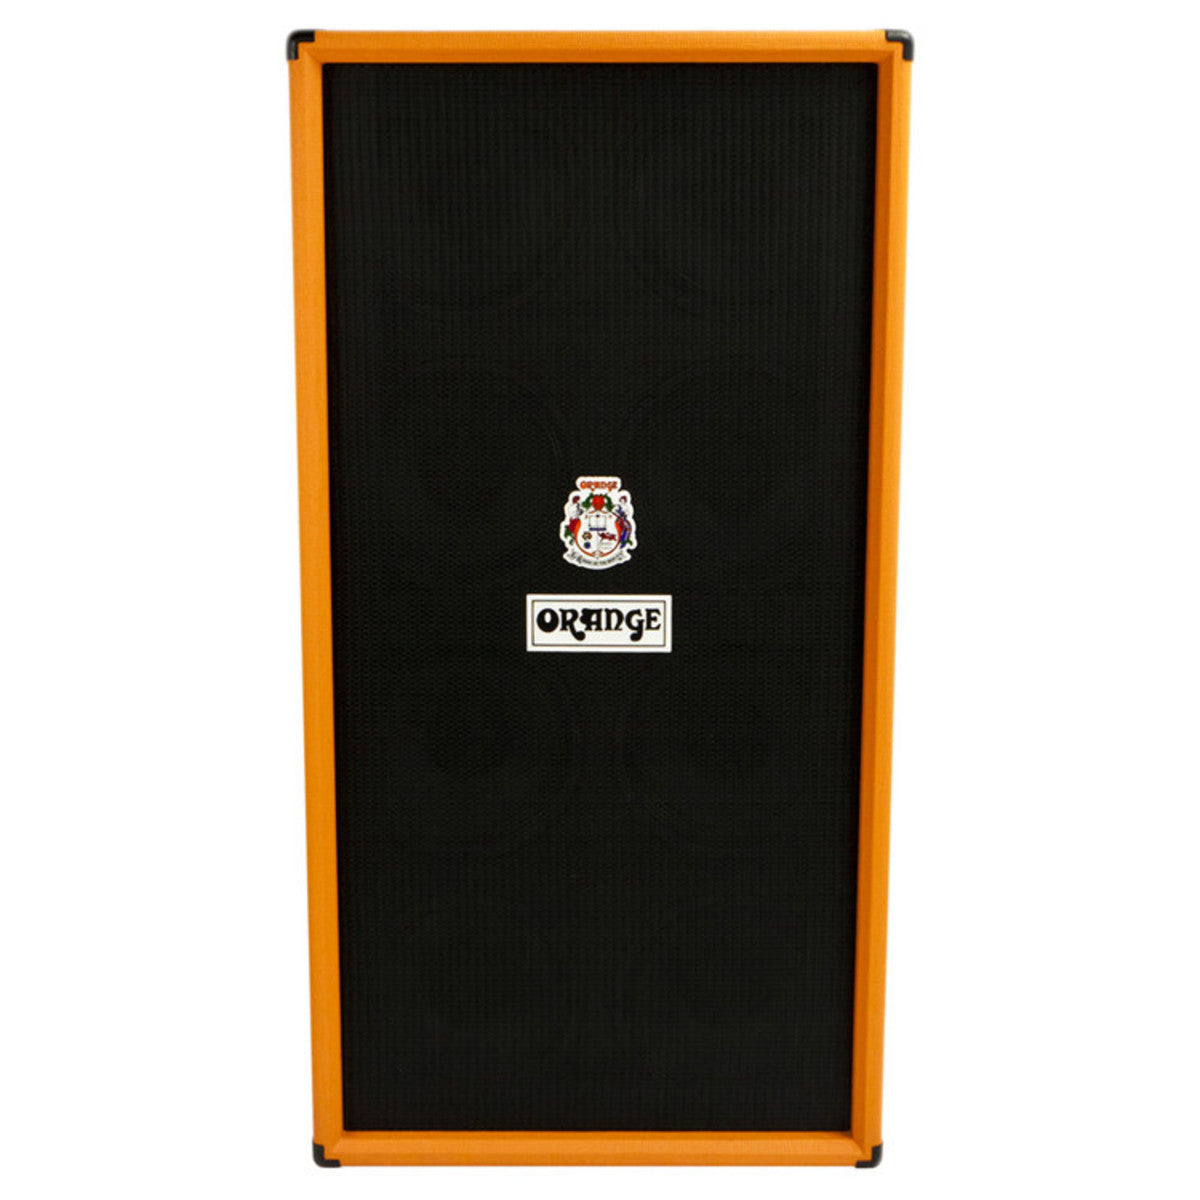 ORANGE OBC810 BASS SPEAKER CABINET, ORANGE, CABINET, orange-obc810-bass-speaker-cabinet, ZOSO MUSIC SDN BHD